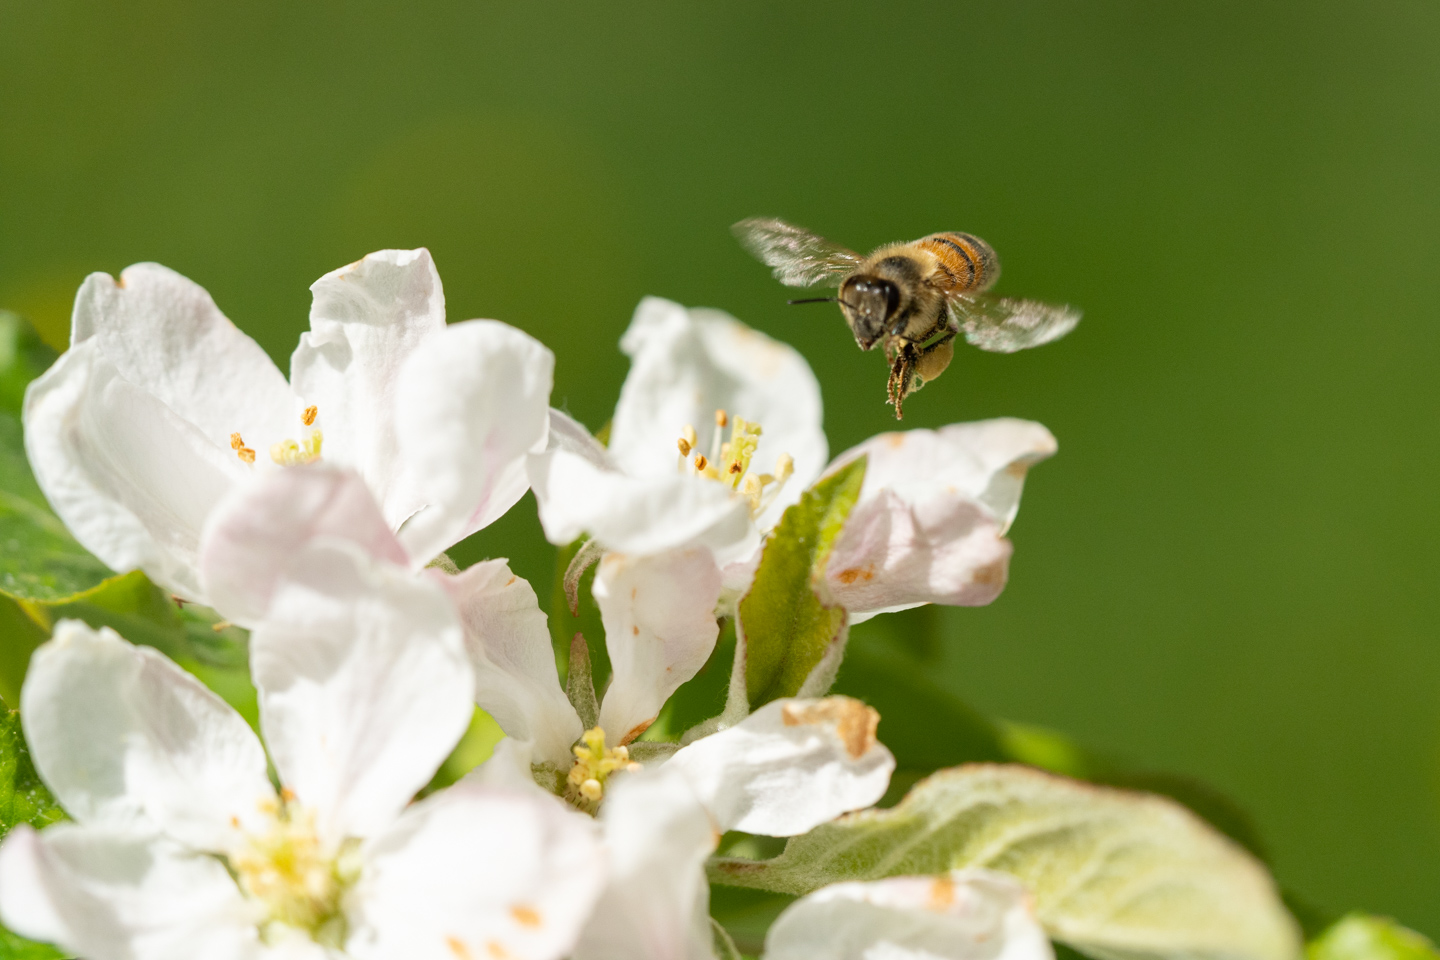 farm photographer - closeup of a bee pollinating an apple blossom